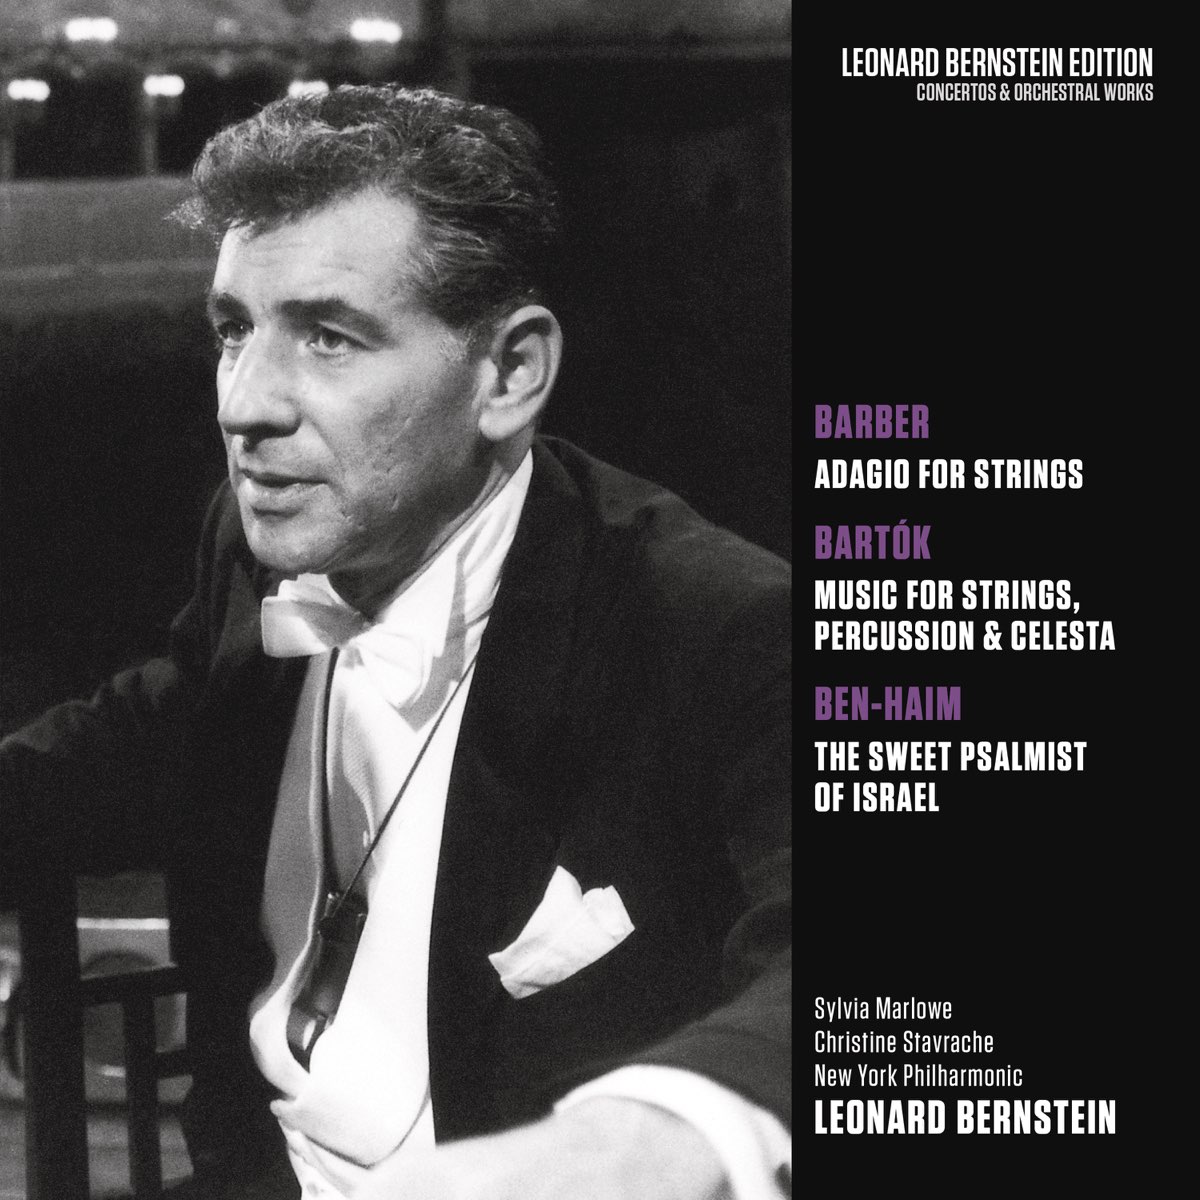 Leonard Bernstein: New York Philharmonic Orchestra. Adagio for Strings, op. 11 Samuel Barber. «Музыка — всем» Бернстайн. Barber adagio